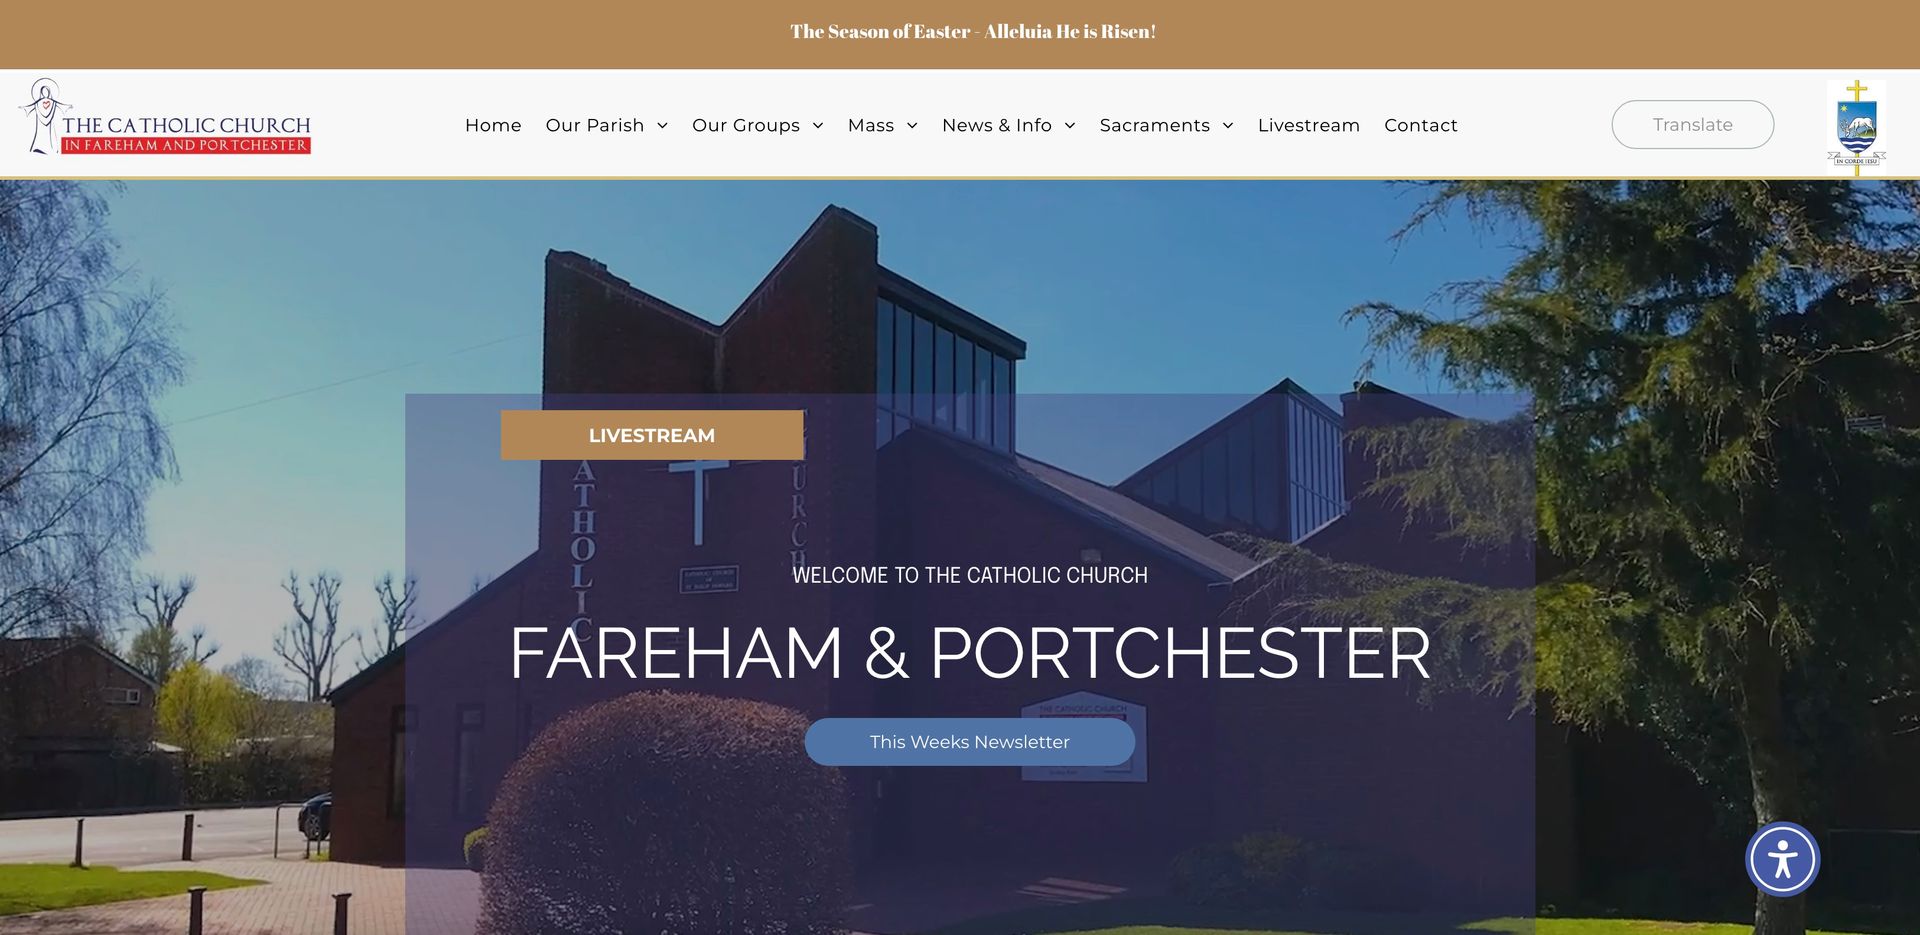 A screenshot of the website for fareham & portchester